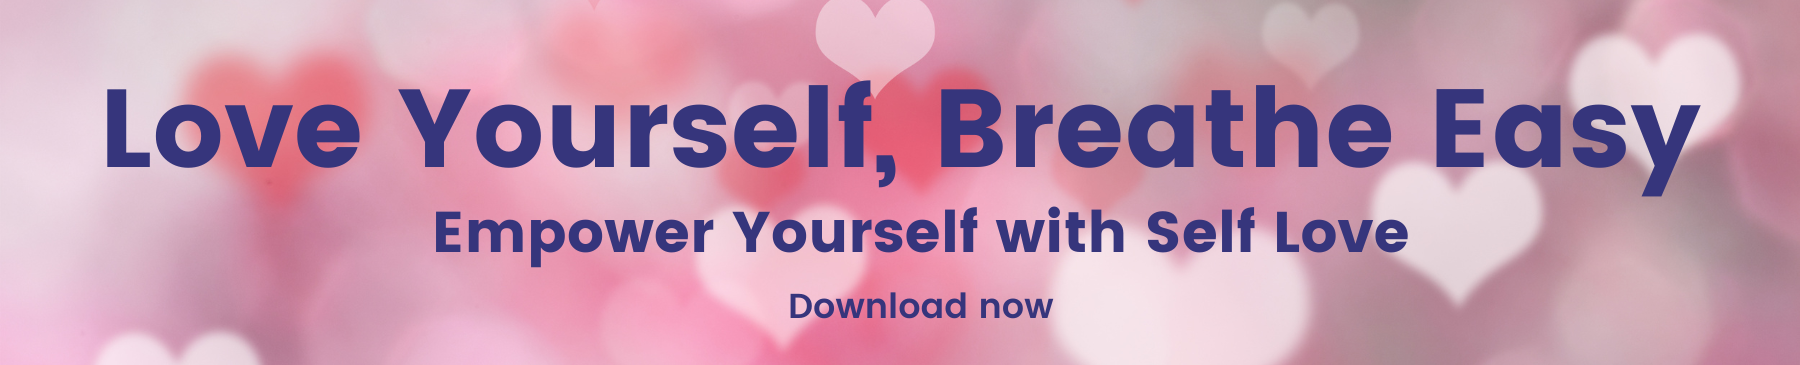 Love Yourself, Breathe Easy (3)